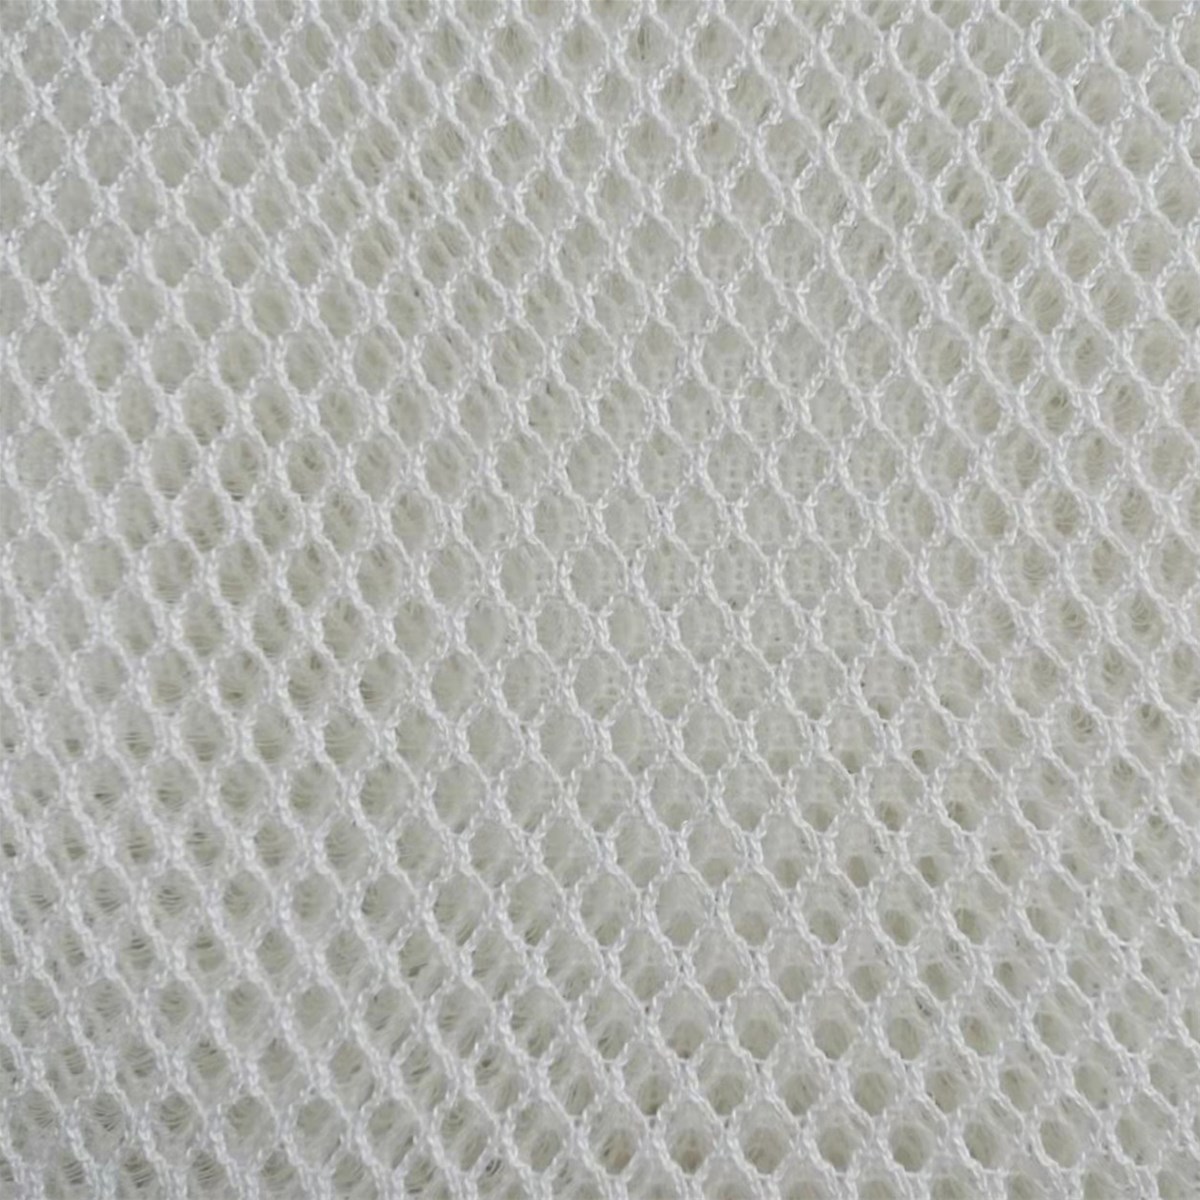 AntiMoisture Underlay for Marine Mattress by Durable XD Spacer Fabric with Anticondensation preventing moisture